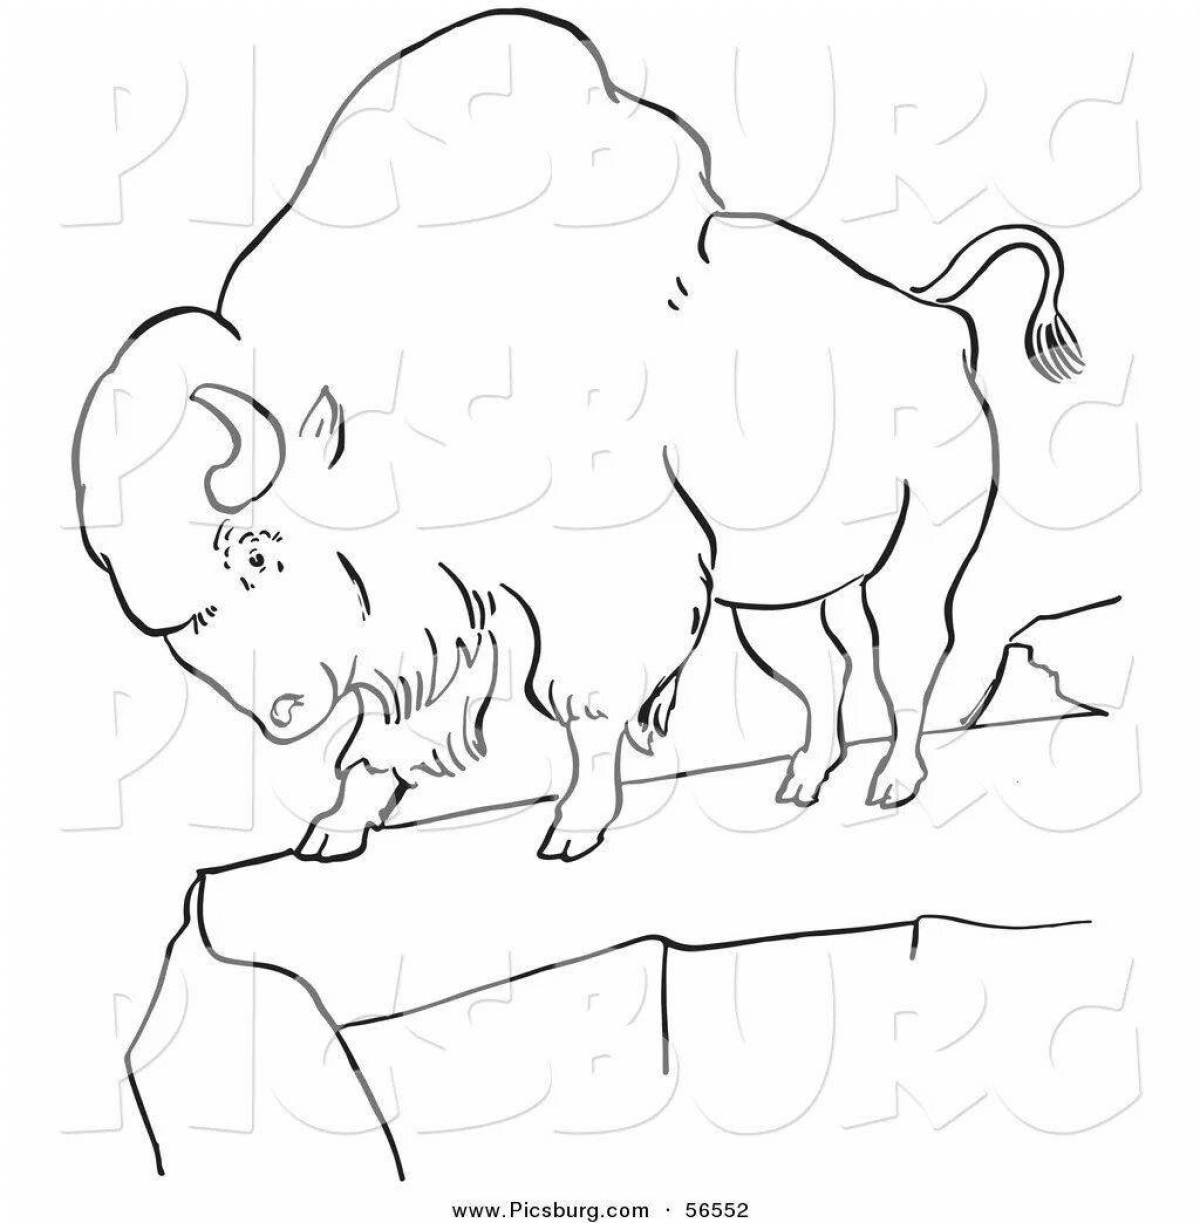 Exquisite bison coloring book